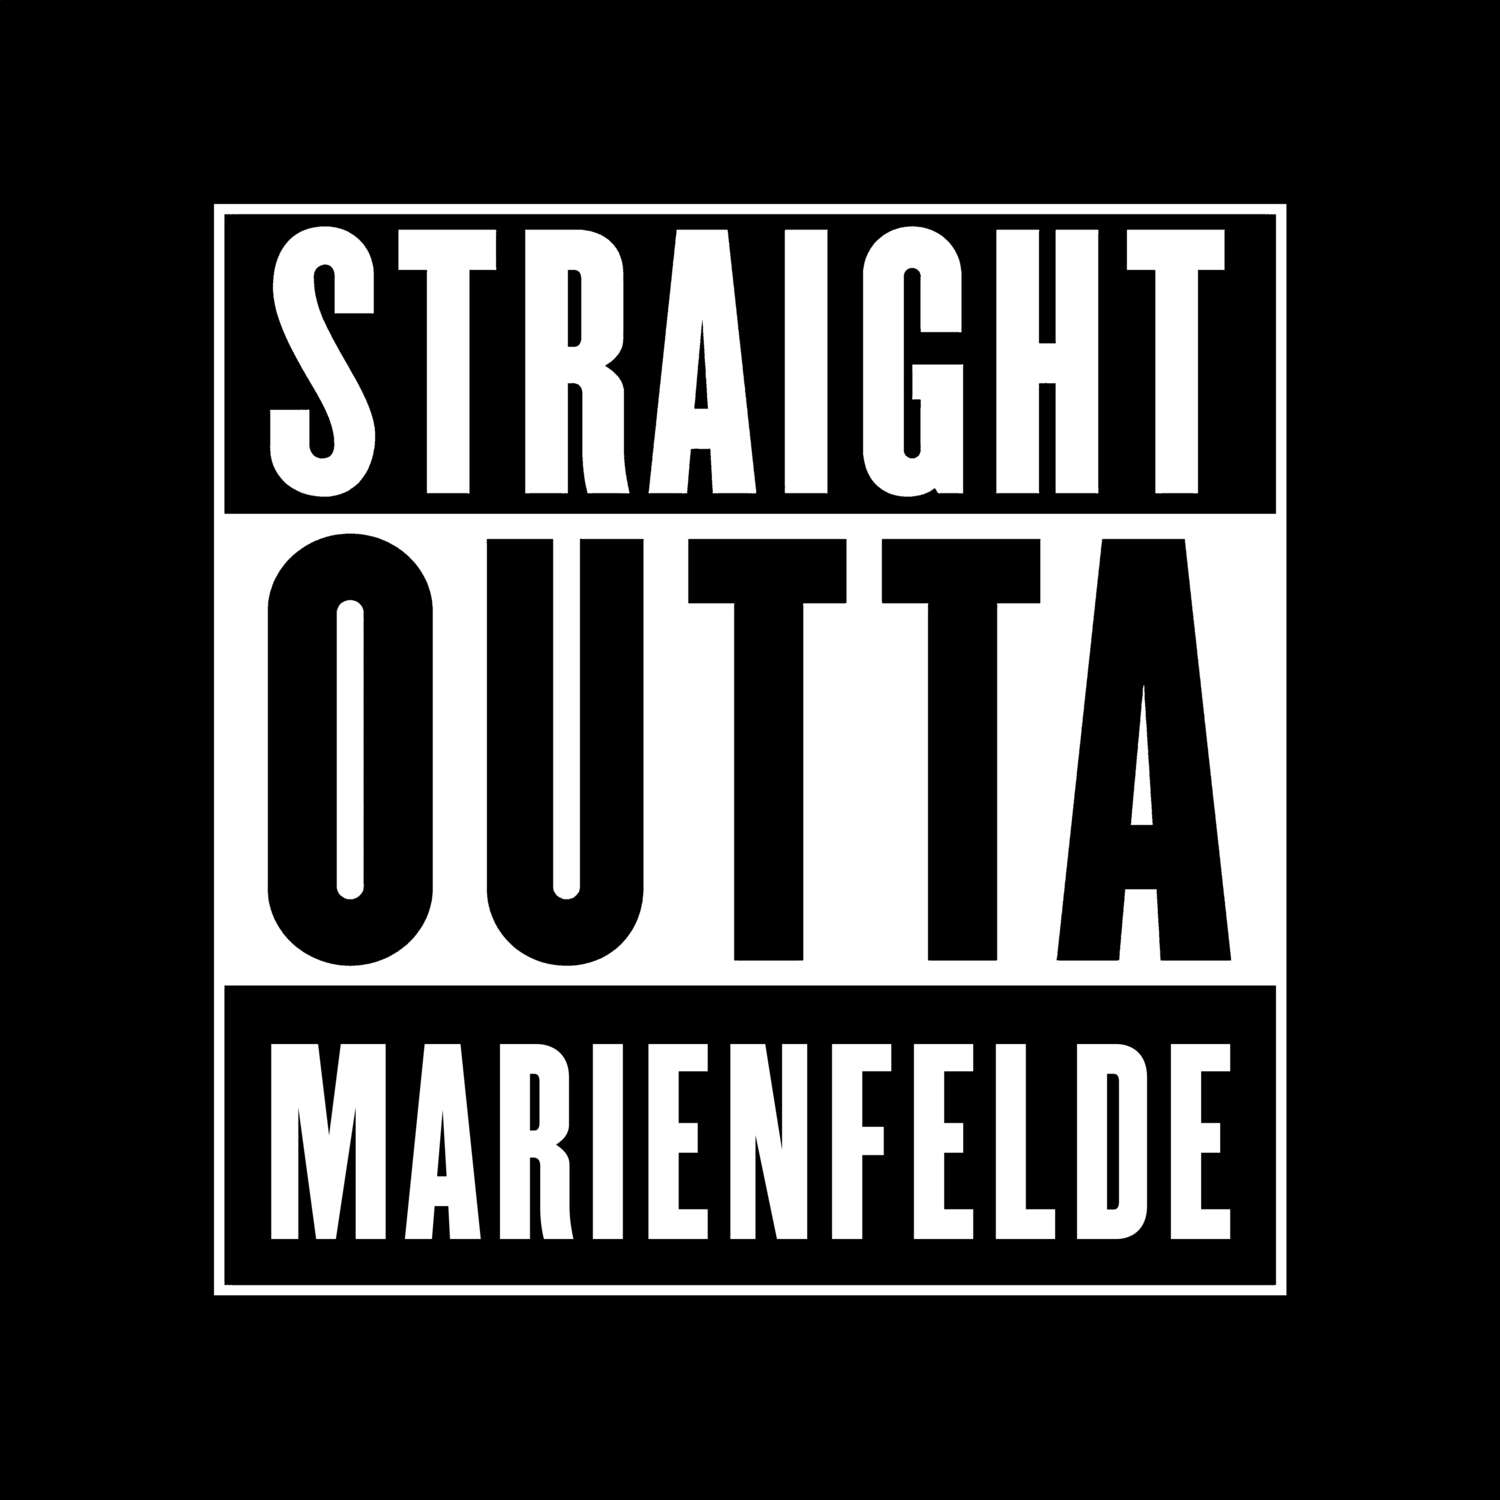 Marienfelde T-Shirt »Straight Outta«